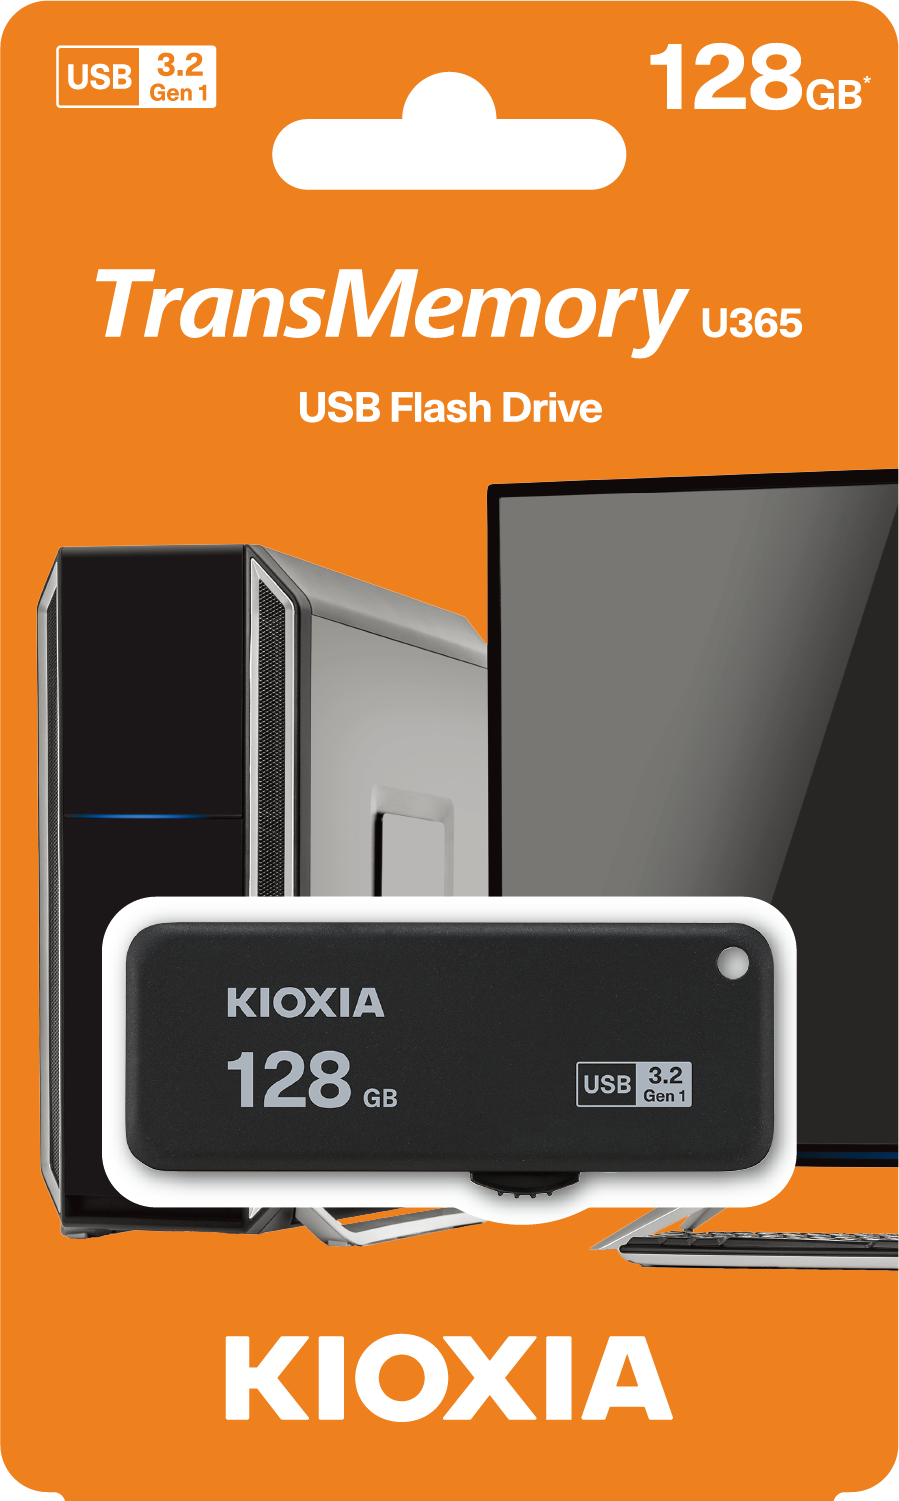 KIOXIA Transsmemory USB High Speed U365